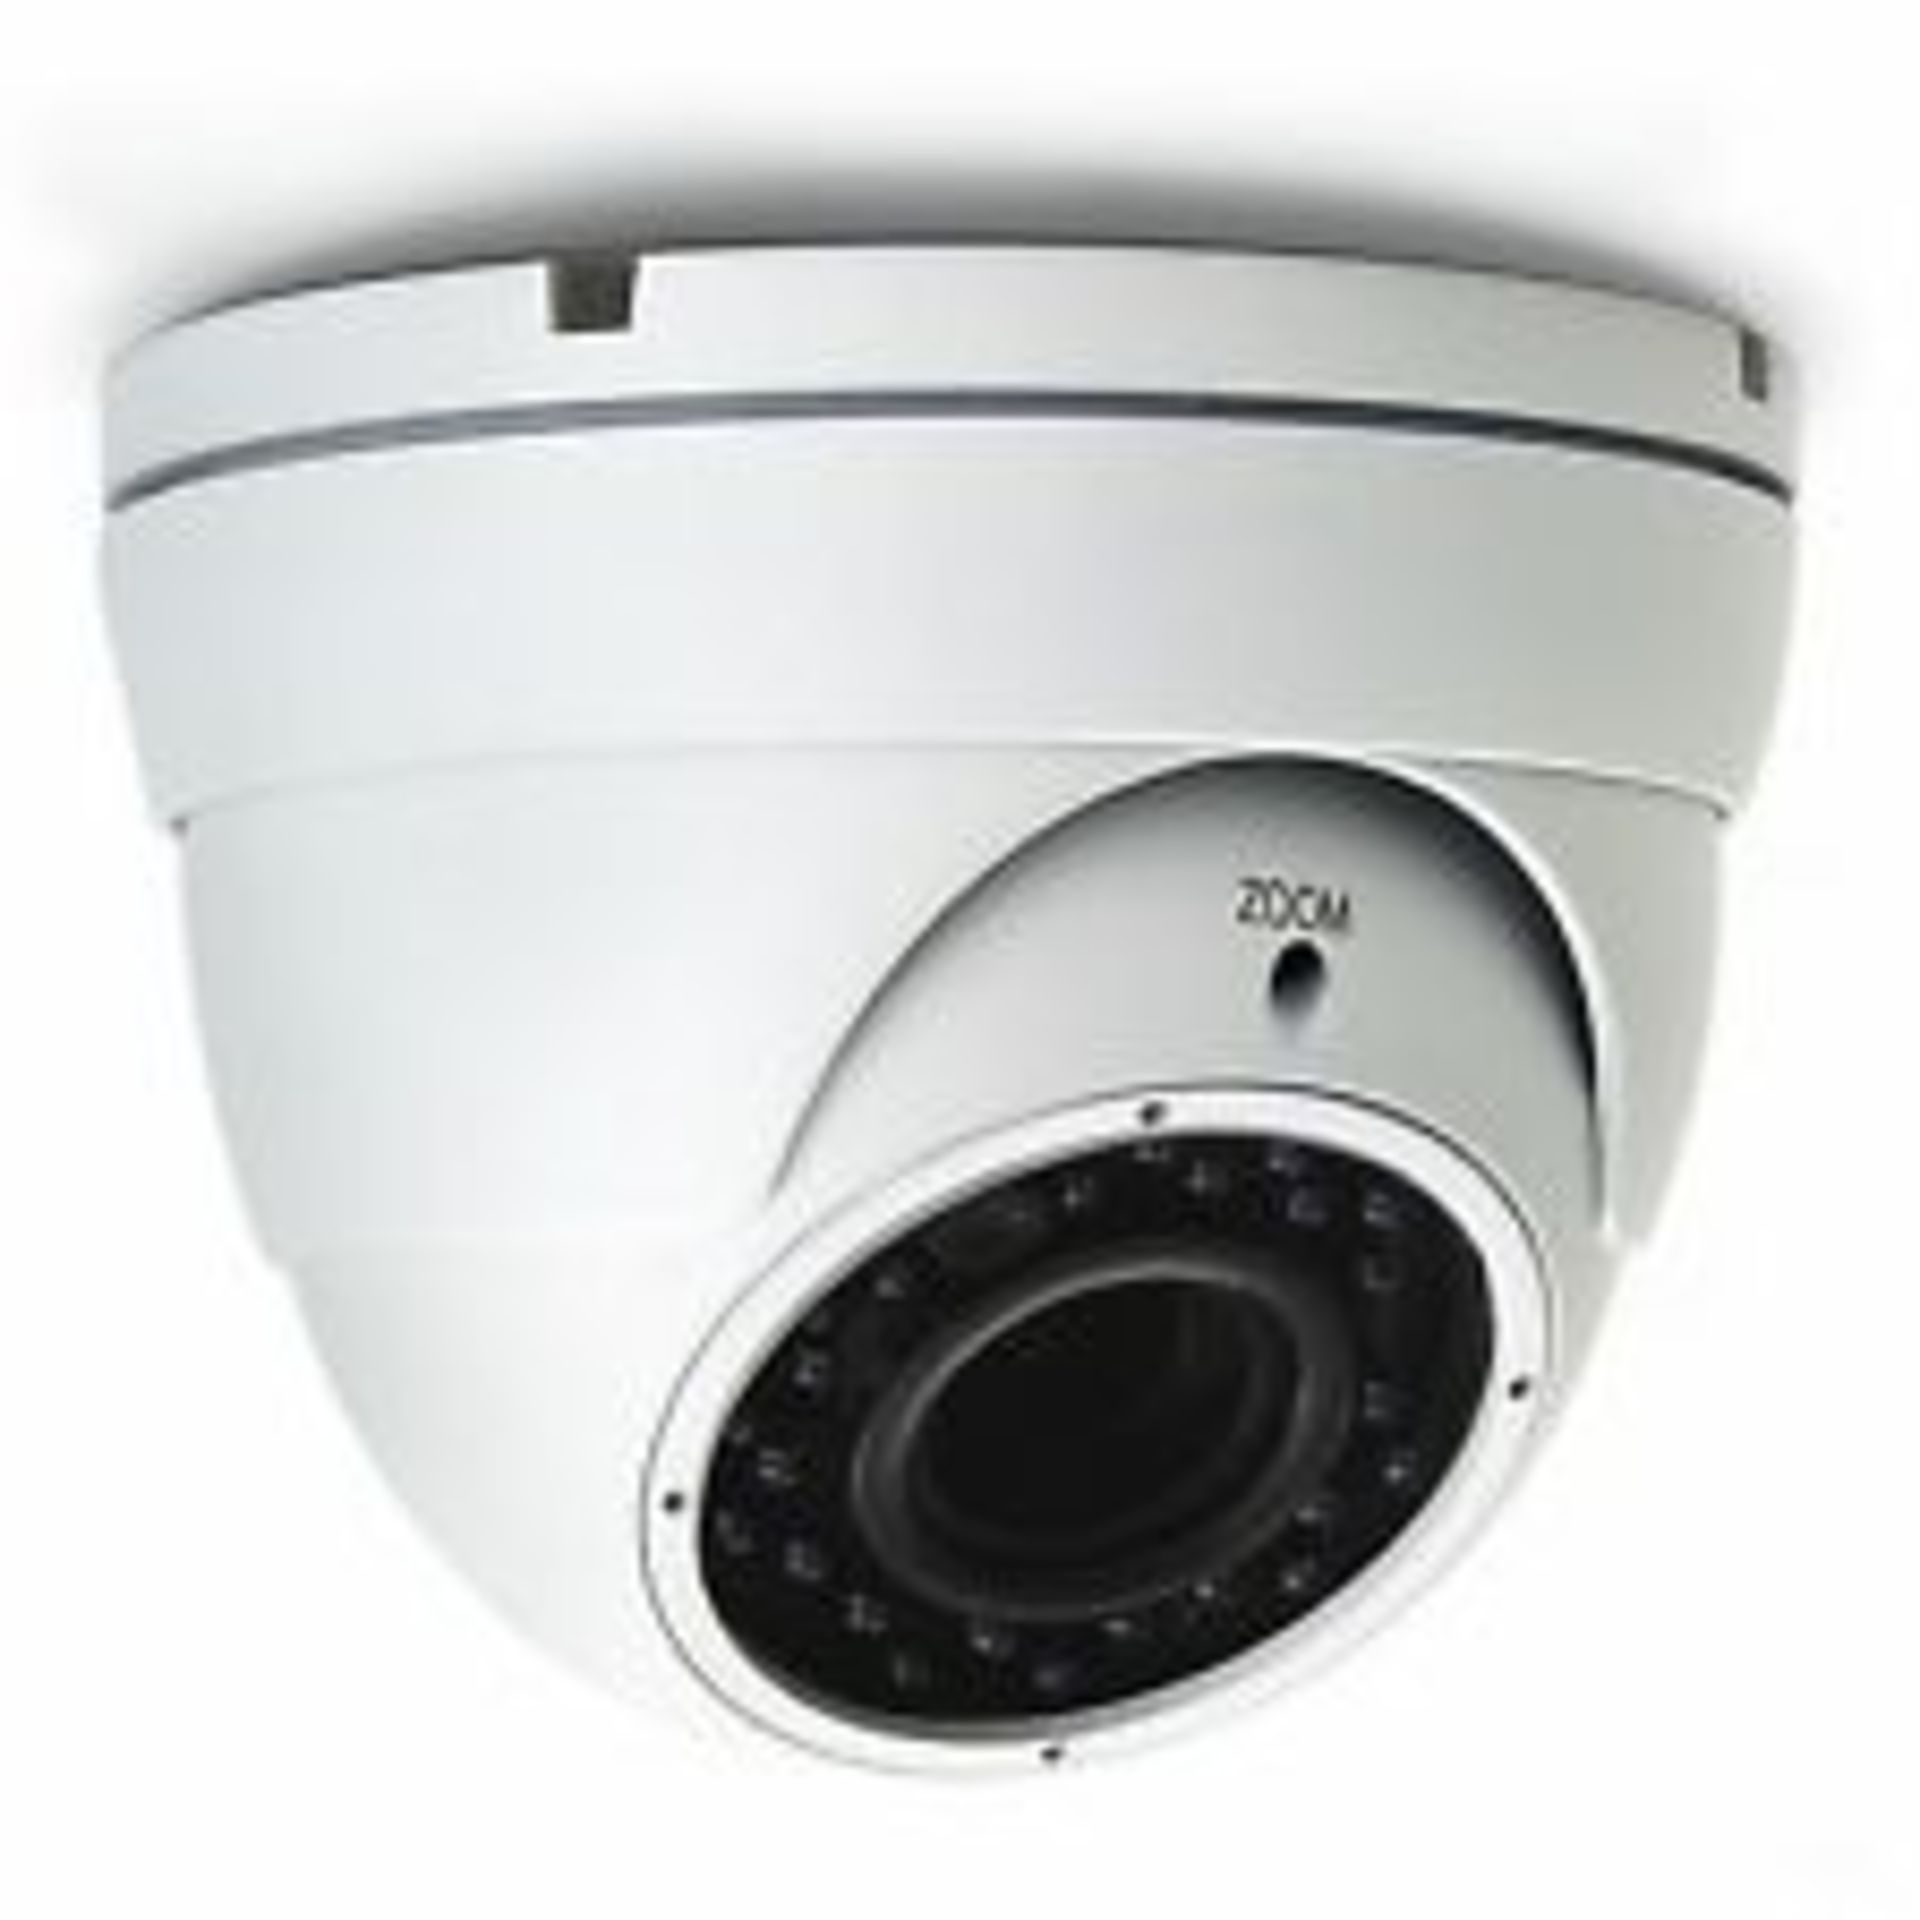 V *TRADE QTY* Brand New Avtech 540TVL Eyeball IR Dome Camera - 1/3" Sony CCD IP65 -White X 3 YOUR